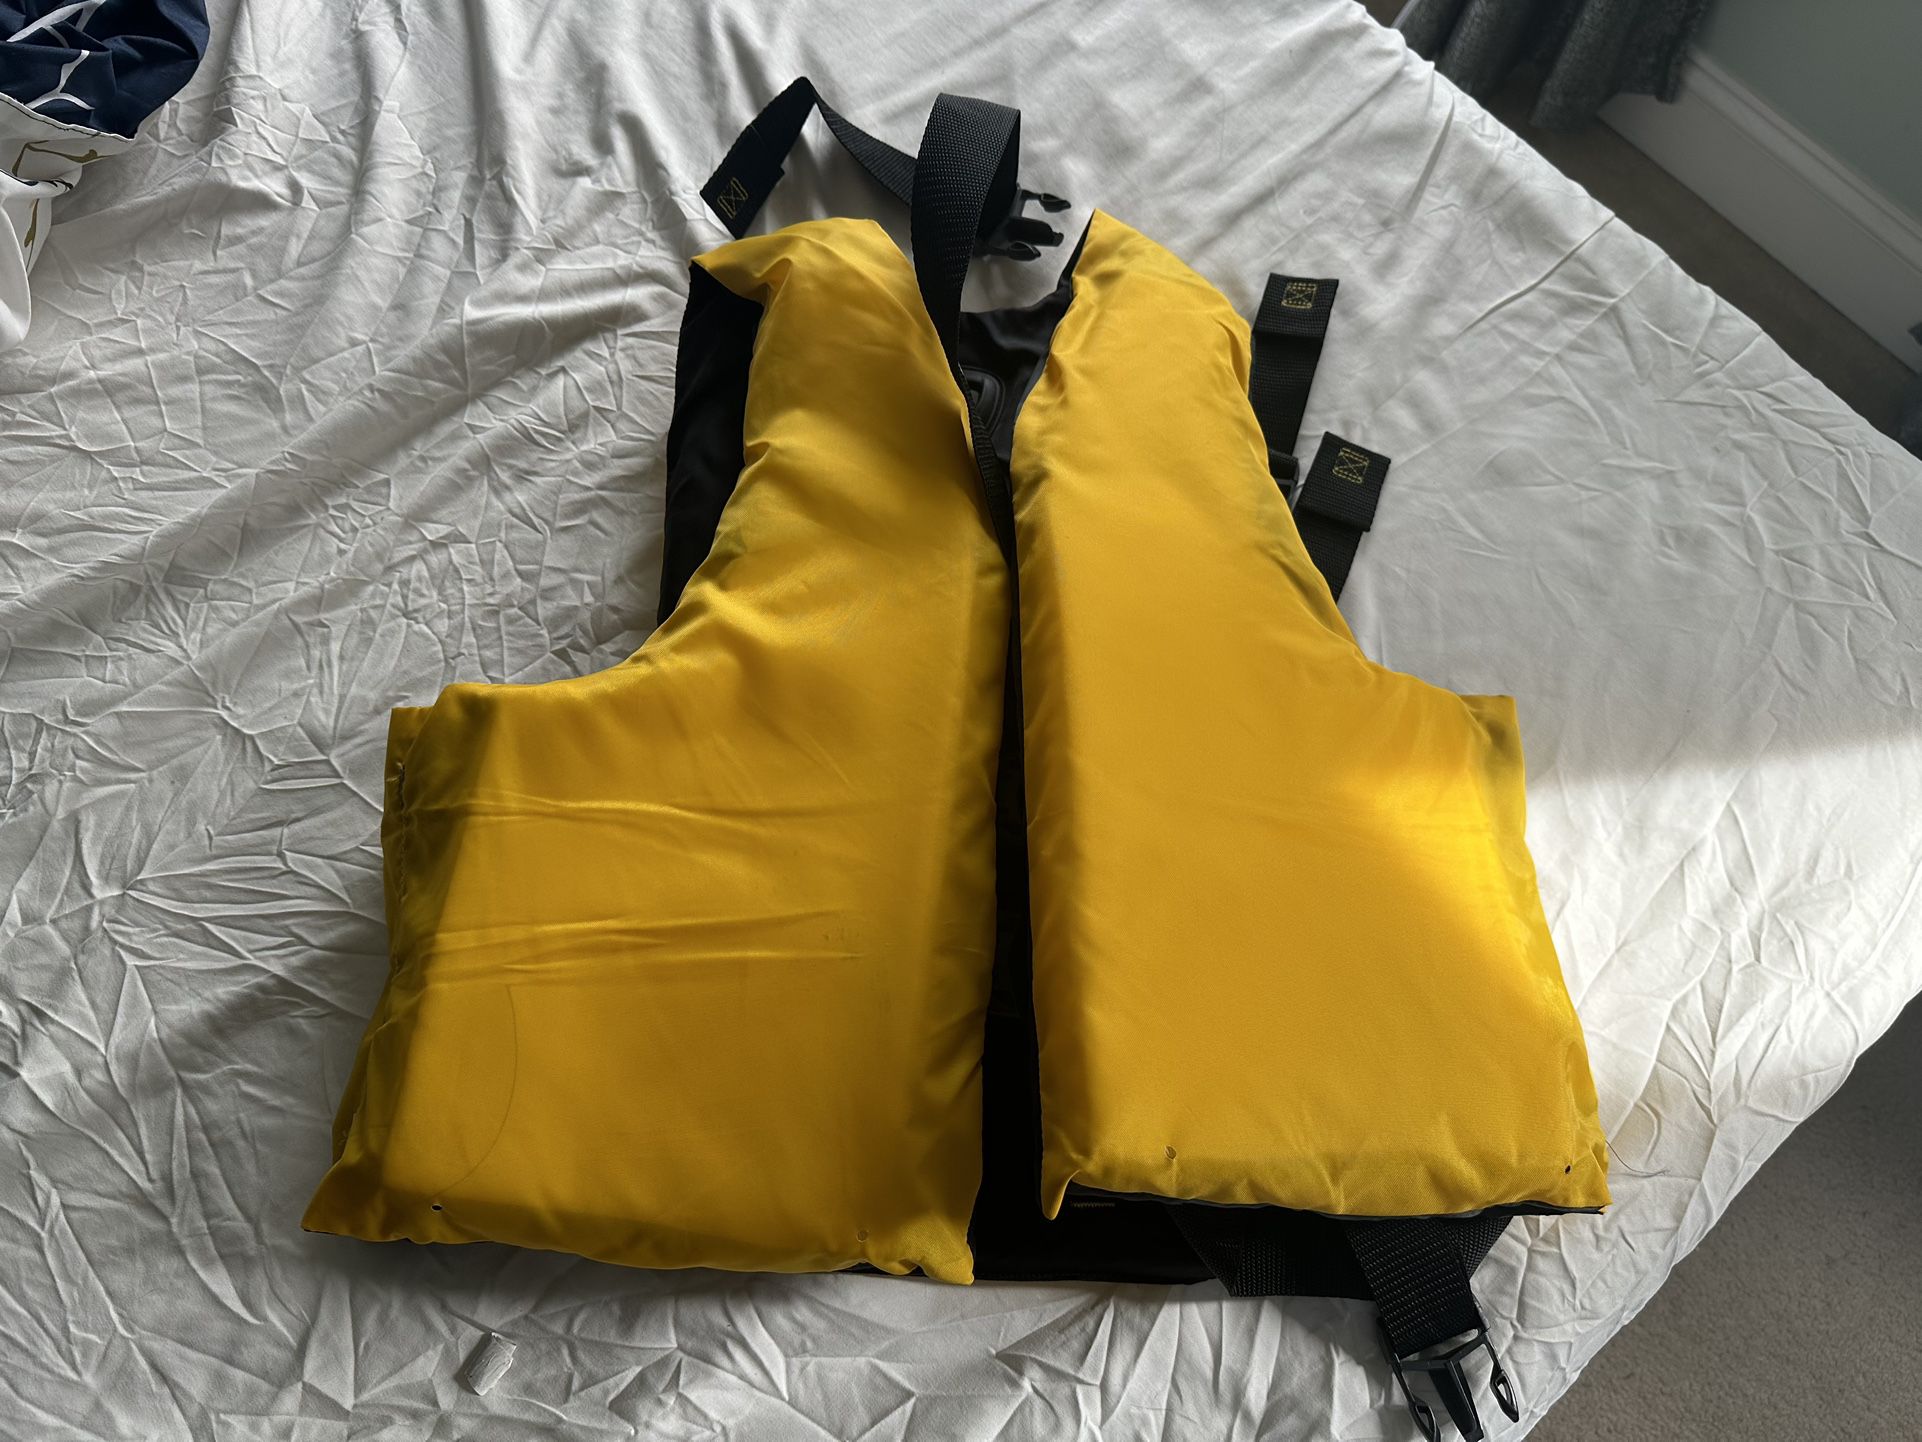 Stearns Adult L/XL life jacket/ vest